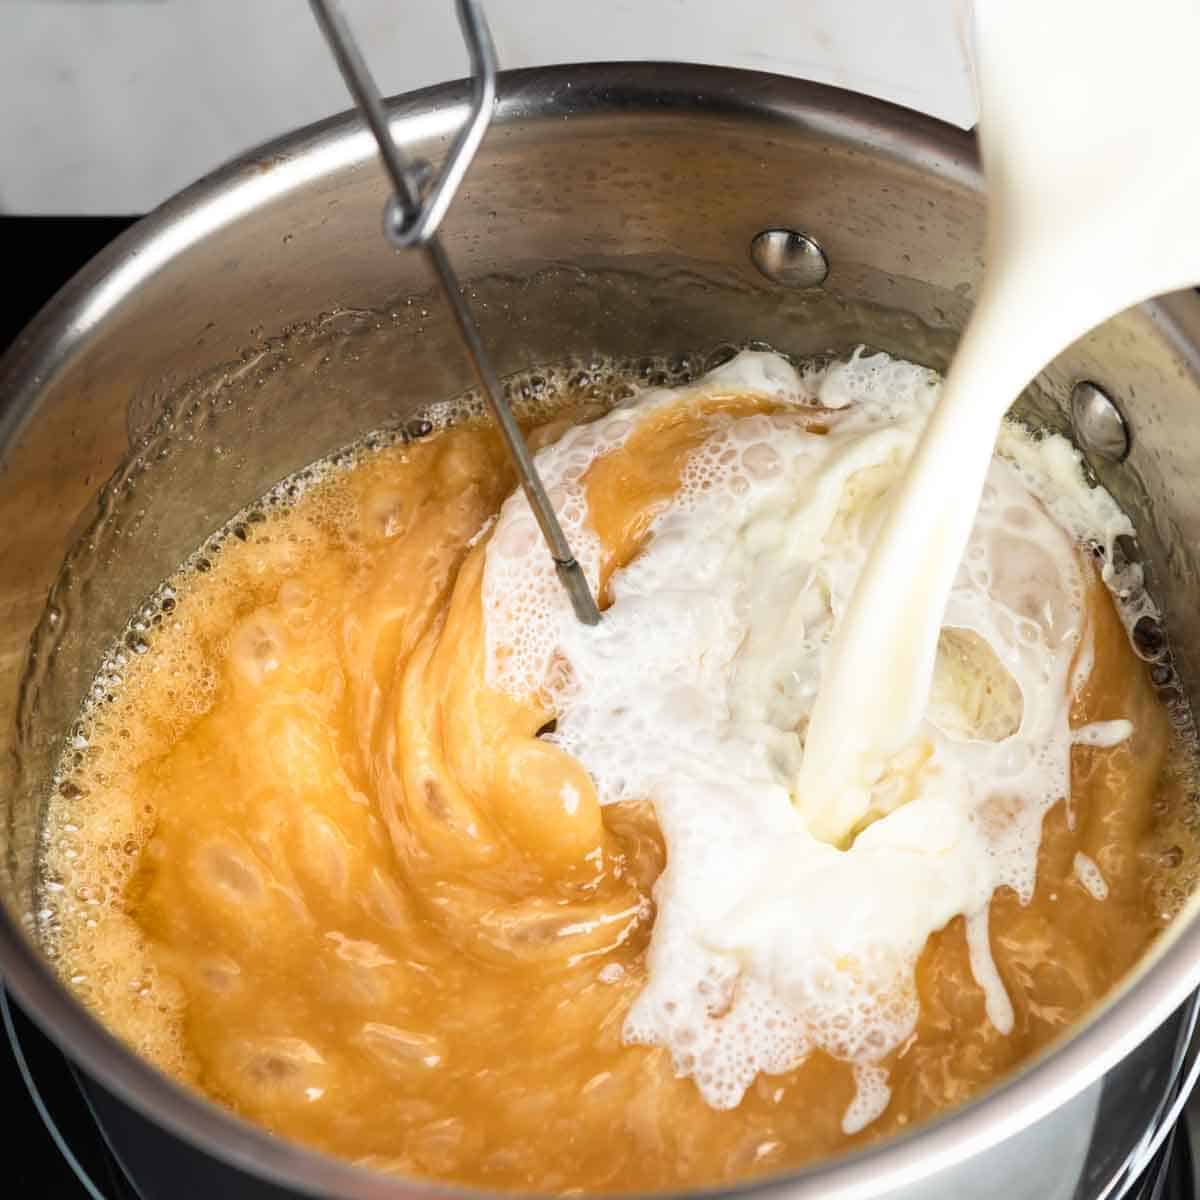 Whisking cream into bubbly caramel sauce